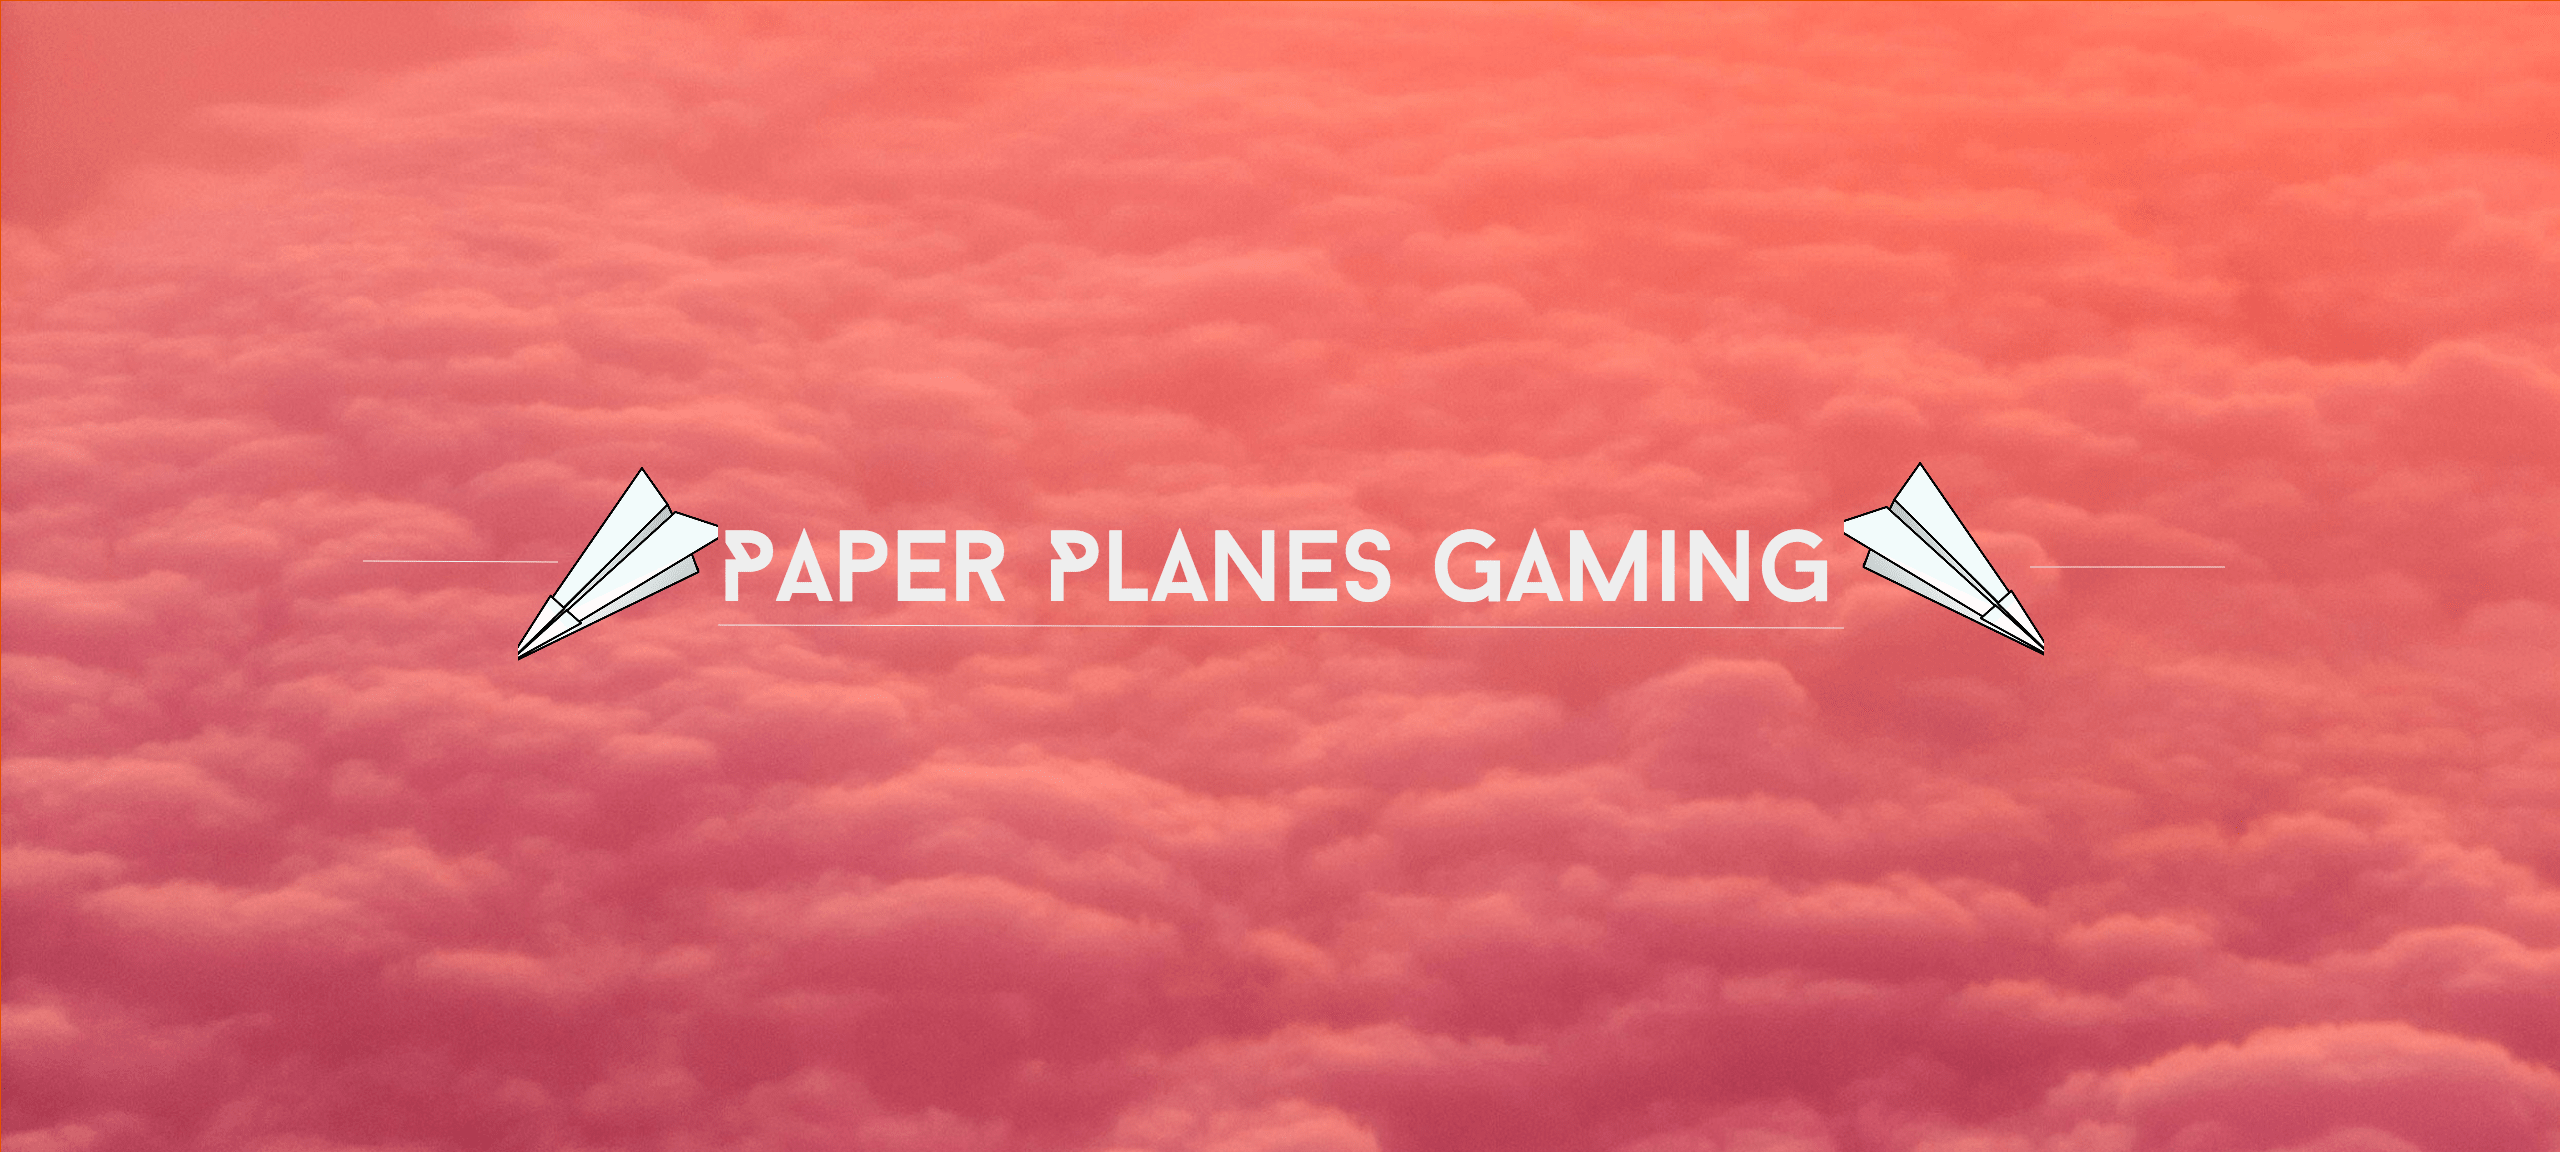 Paper Planes Gaming Banner Design 